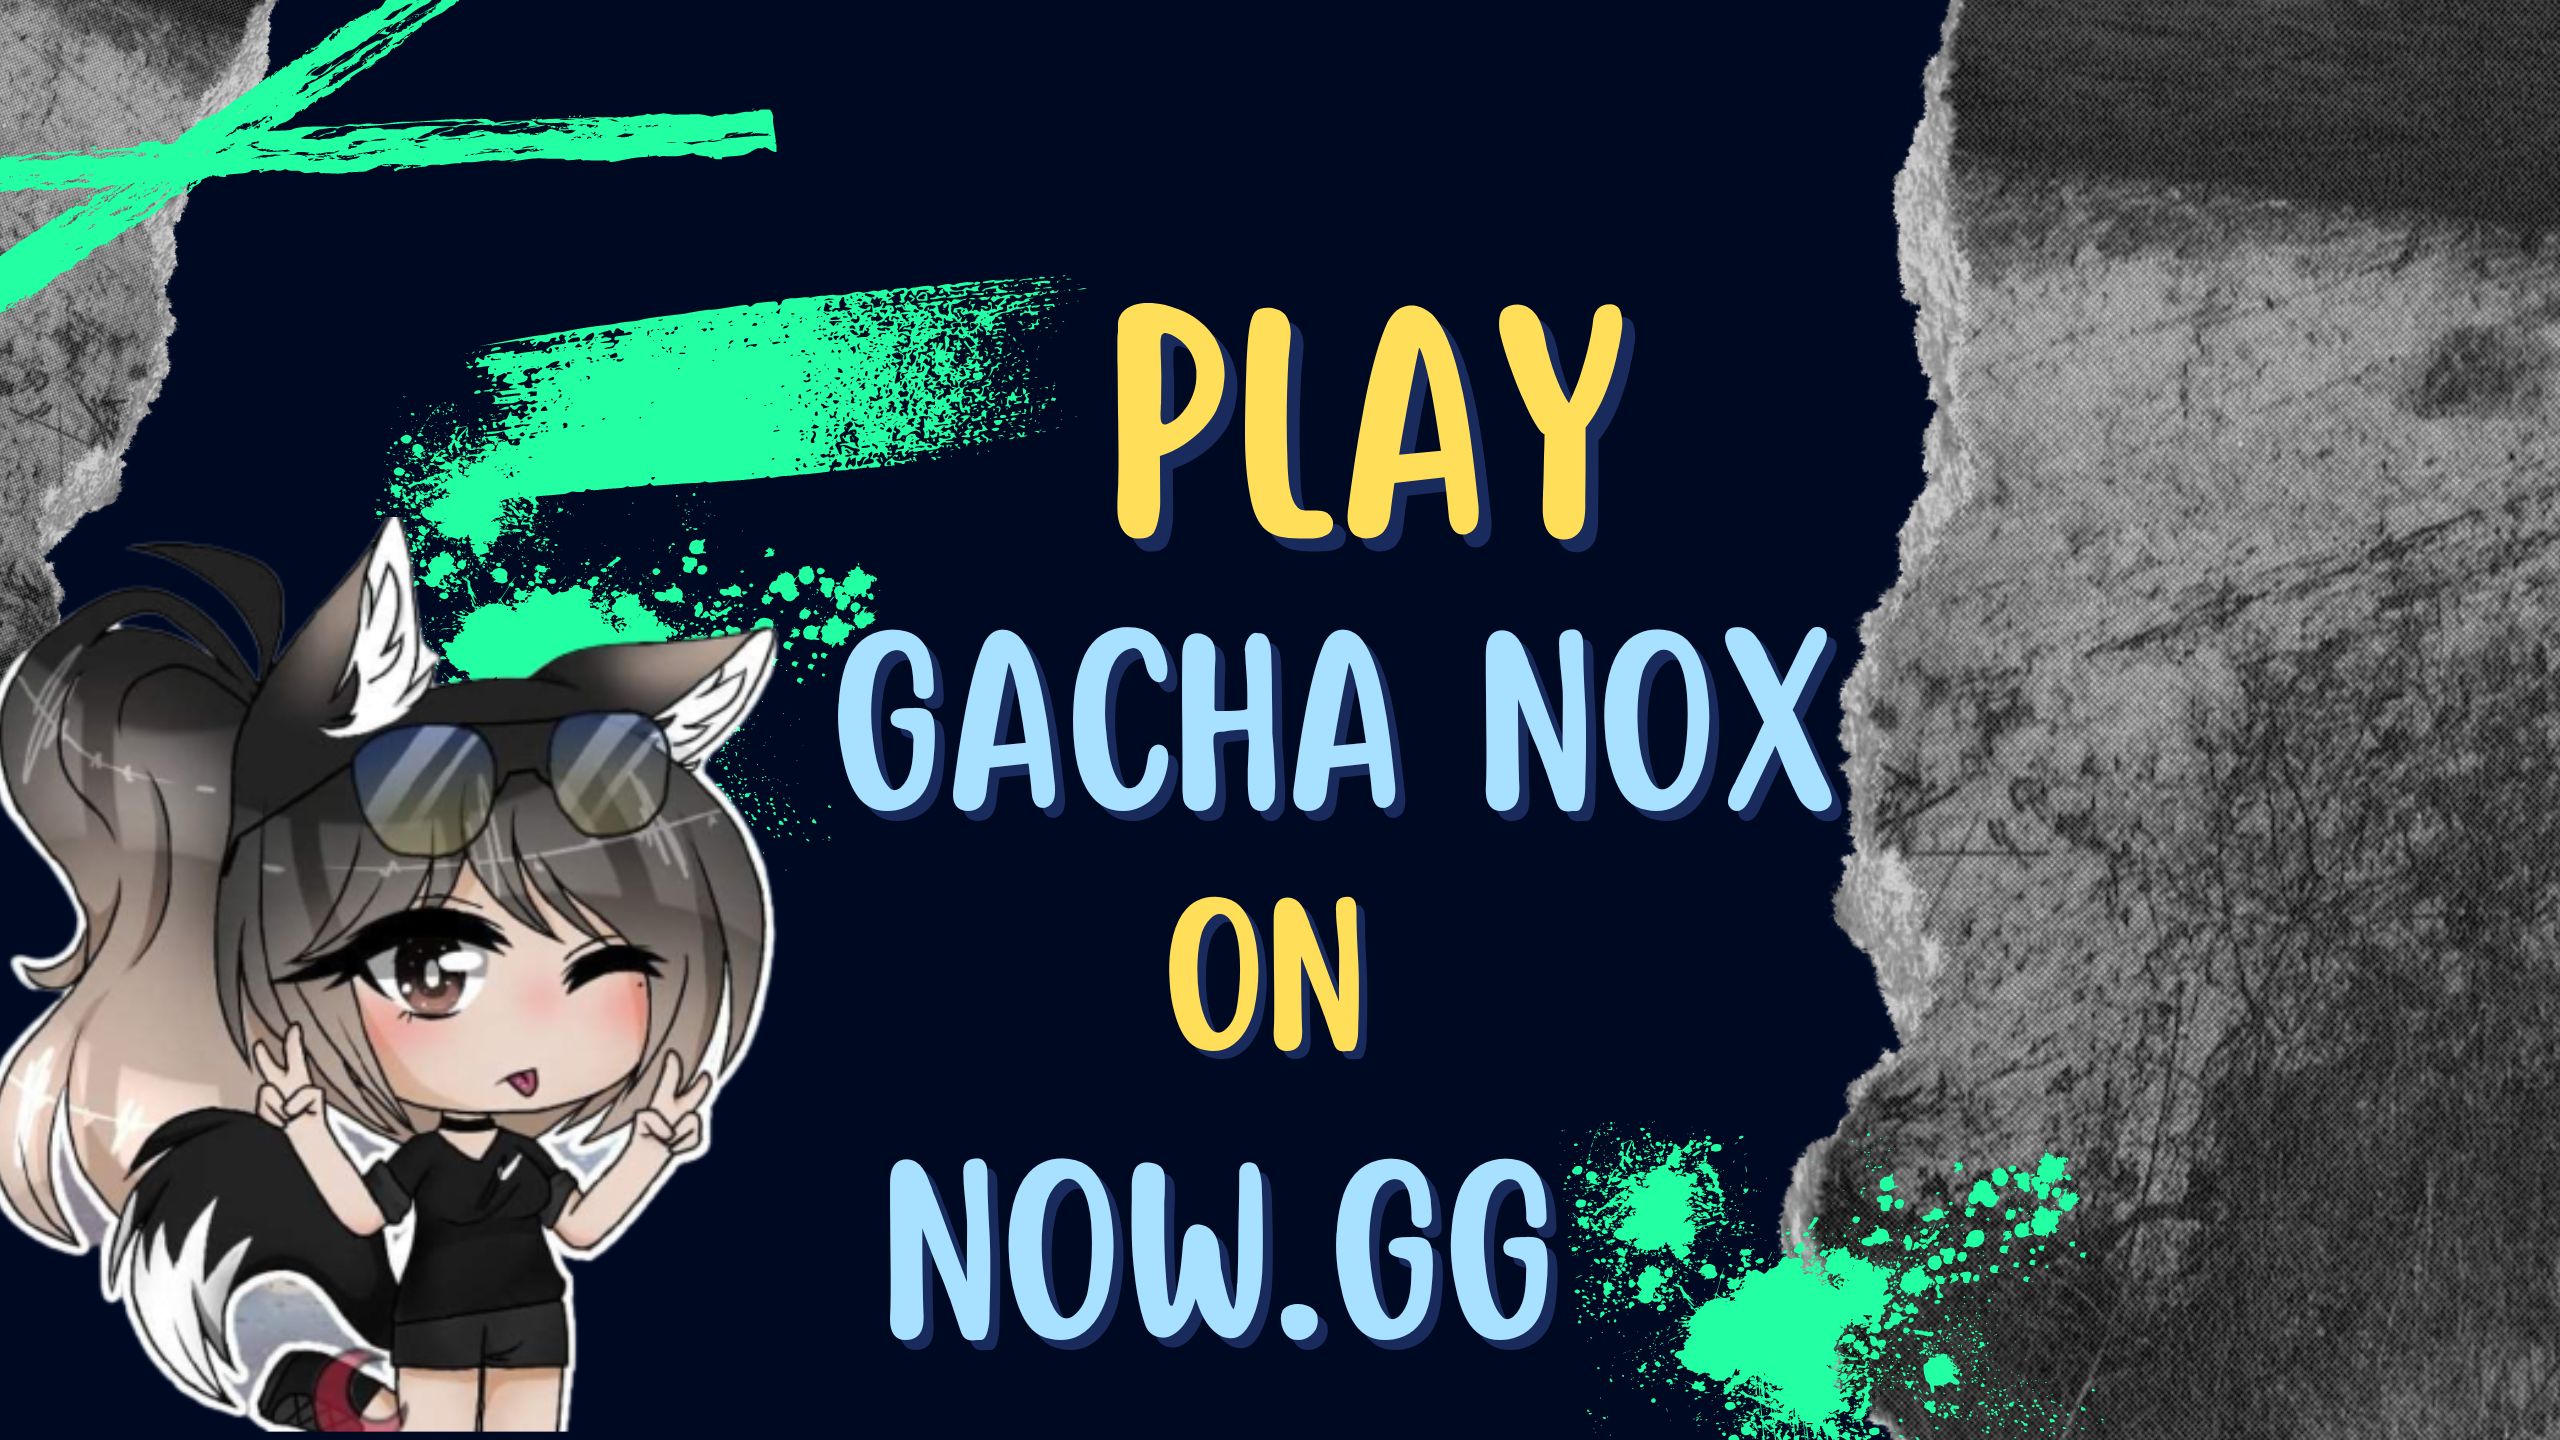 Now.gg Gacha Nox: Play Gacha Nox Online Free on PC & Mobile